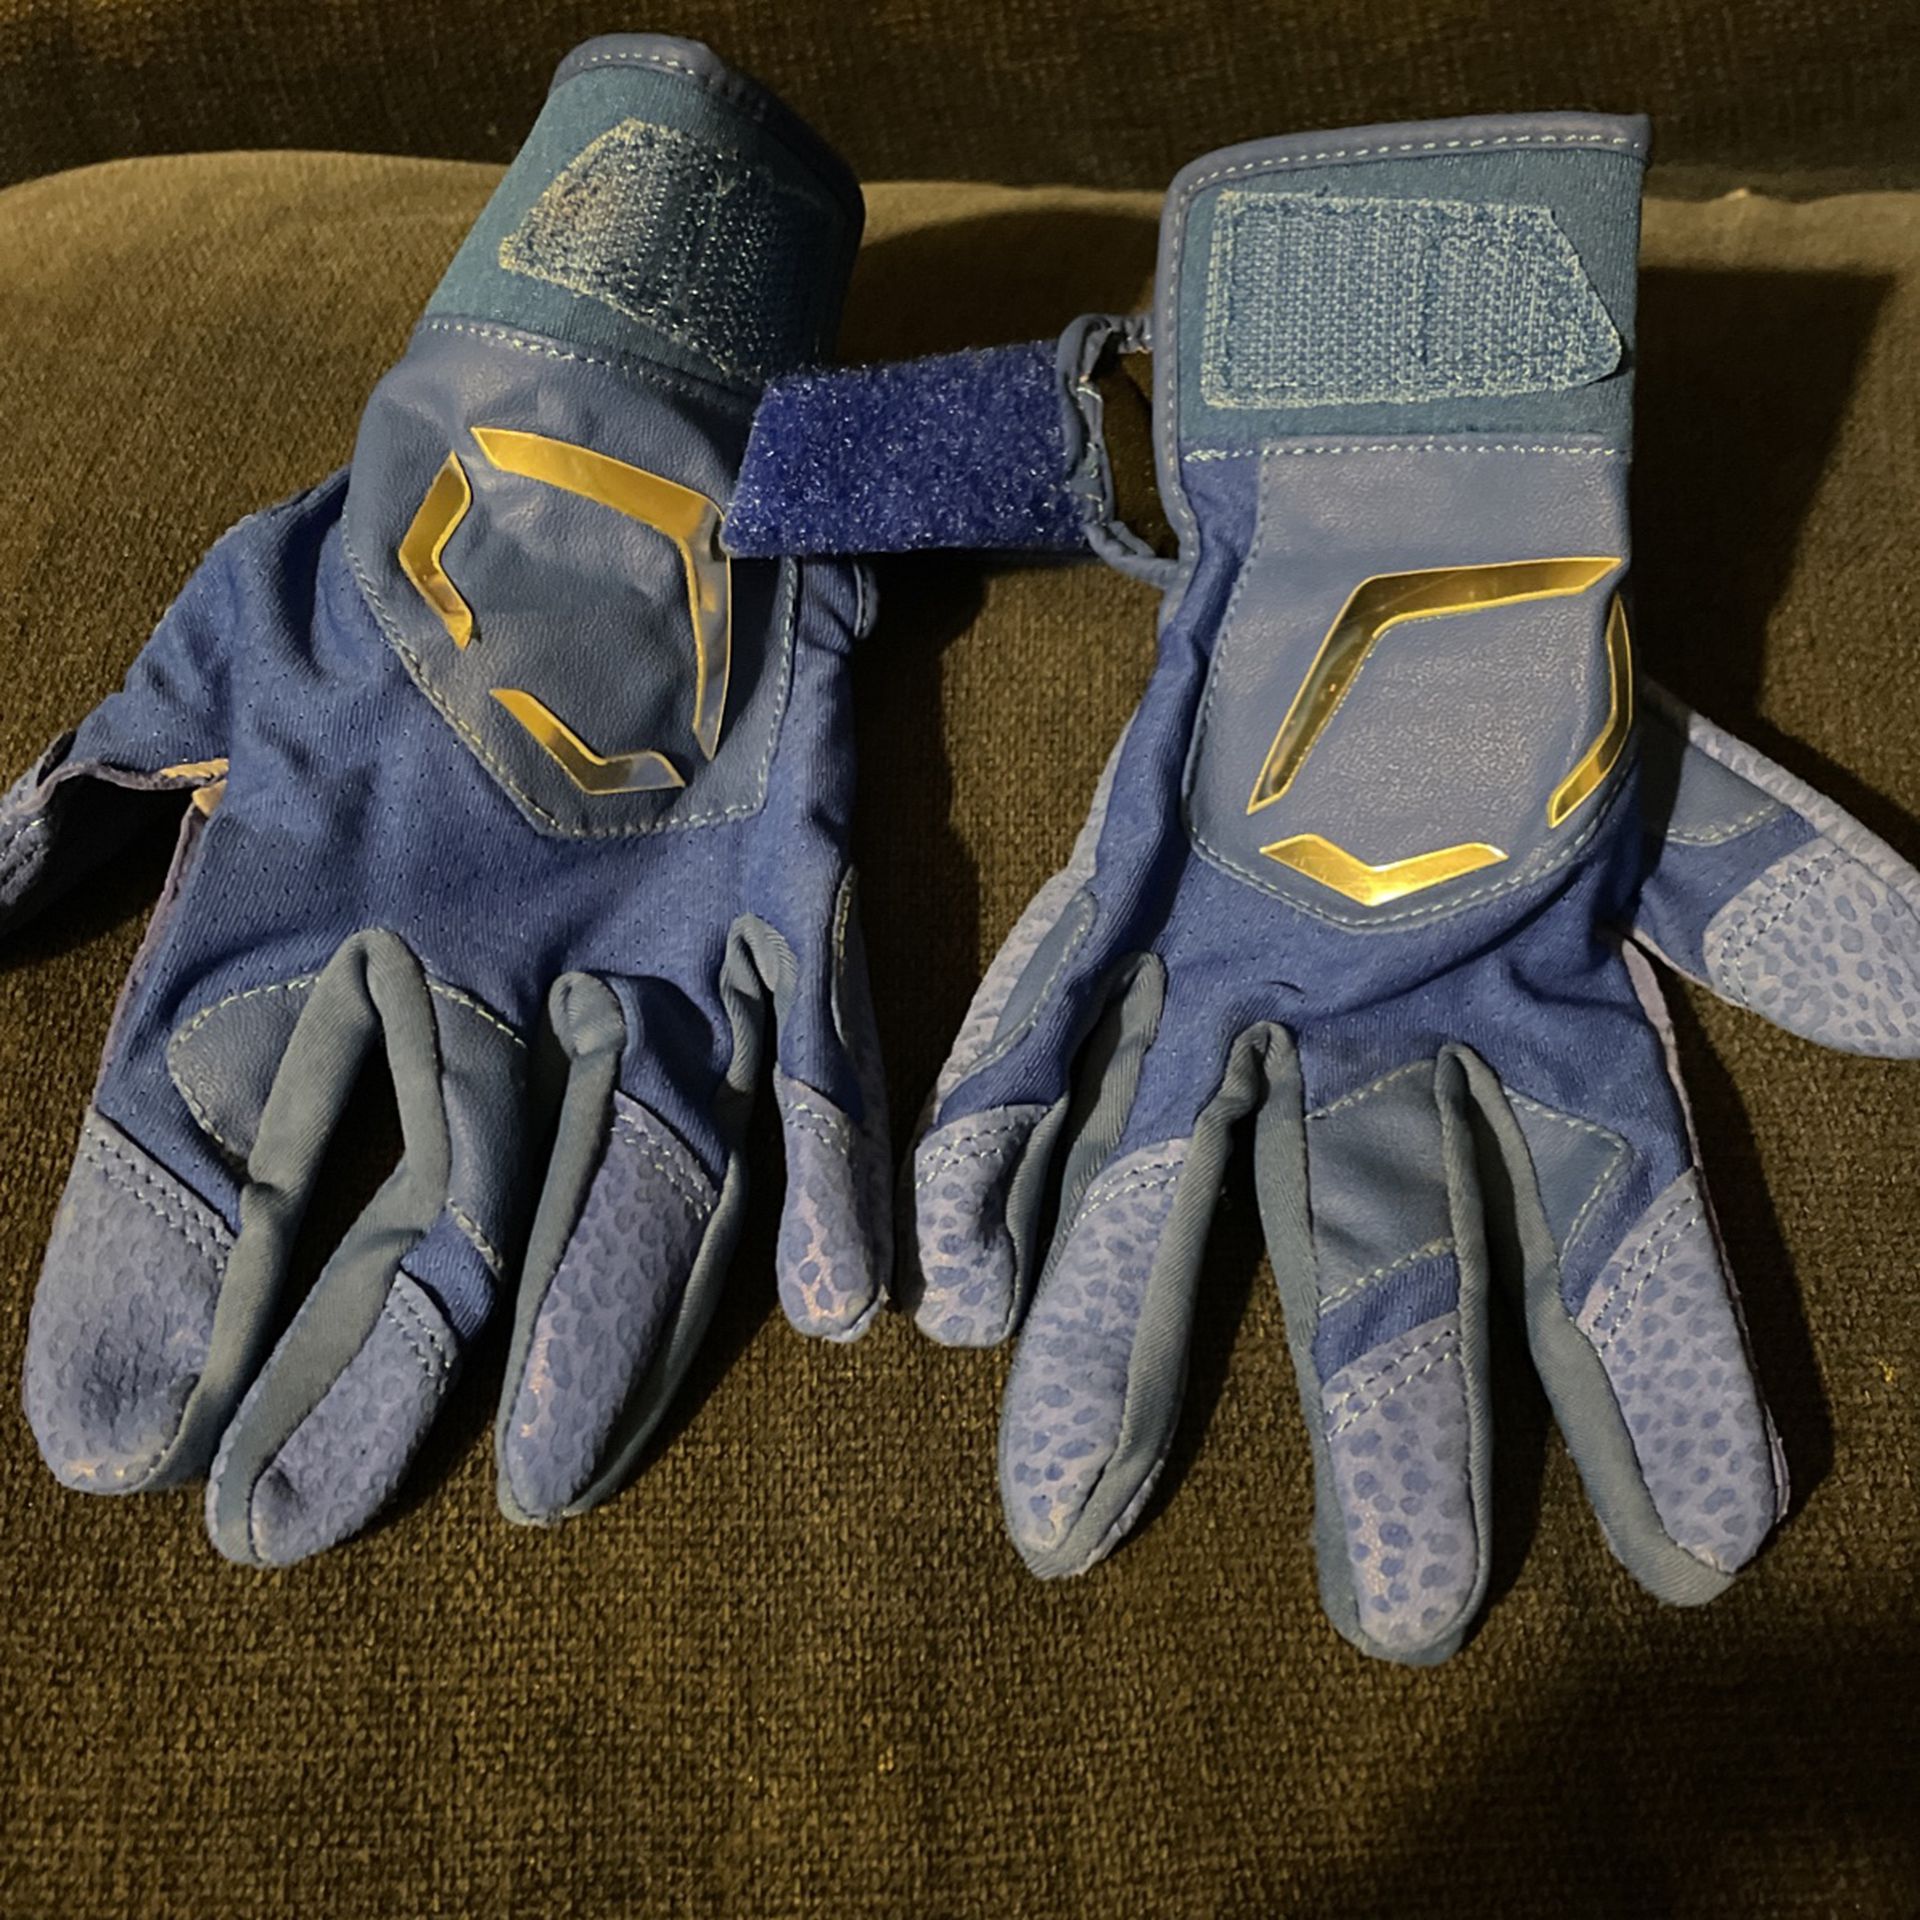 Baseball Gloves-Youth medium (worn once)